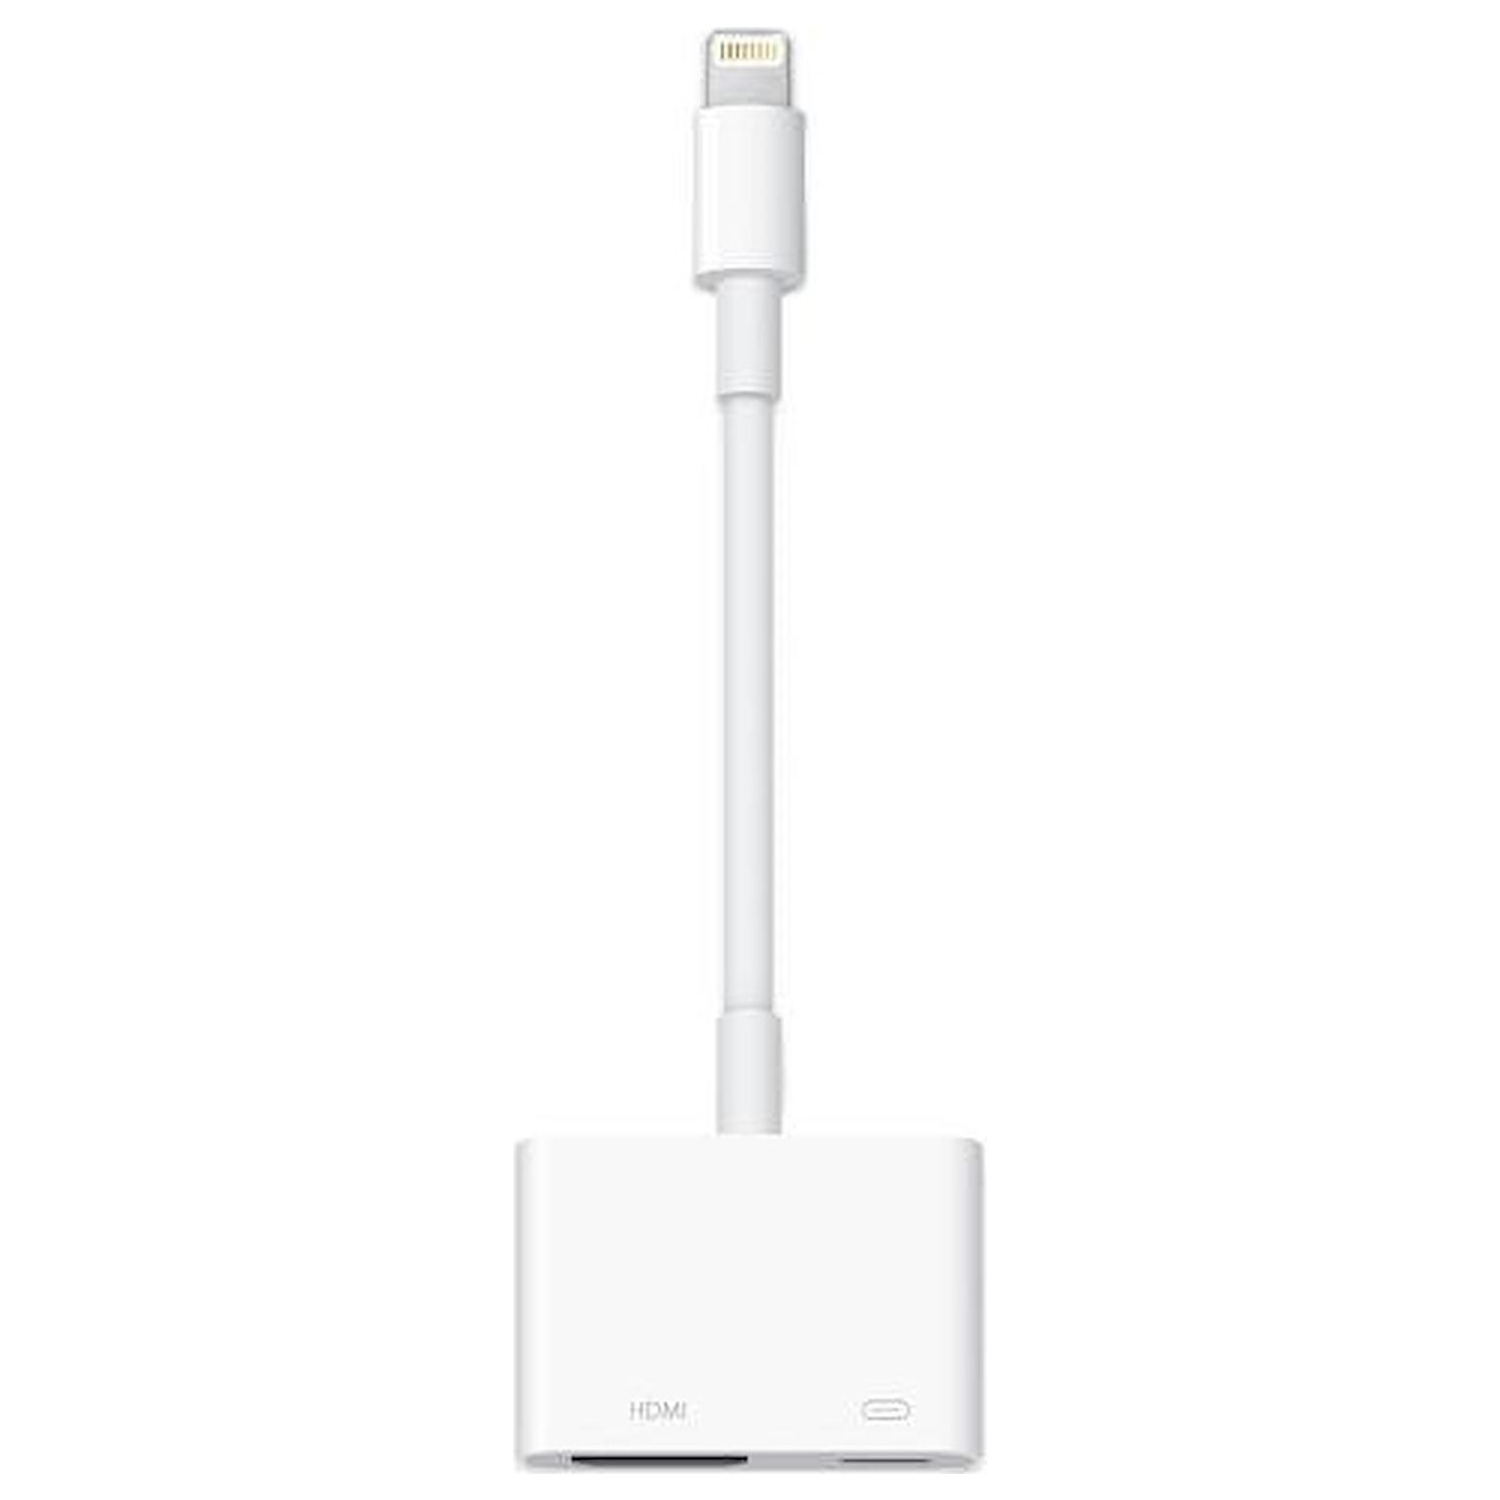 Image of Adattatore lightning digital AV Apple per iphone ipad o ipod con connettore lightning